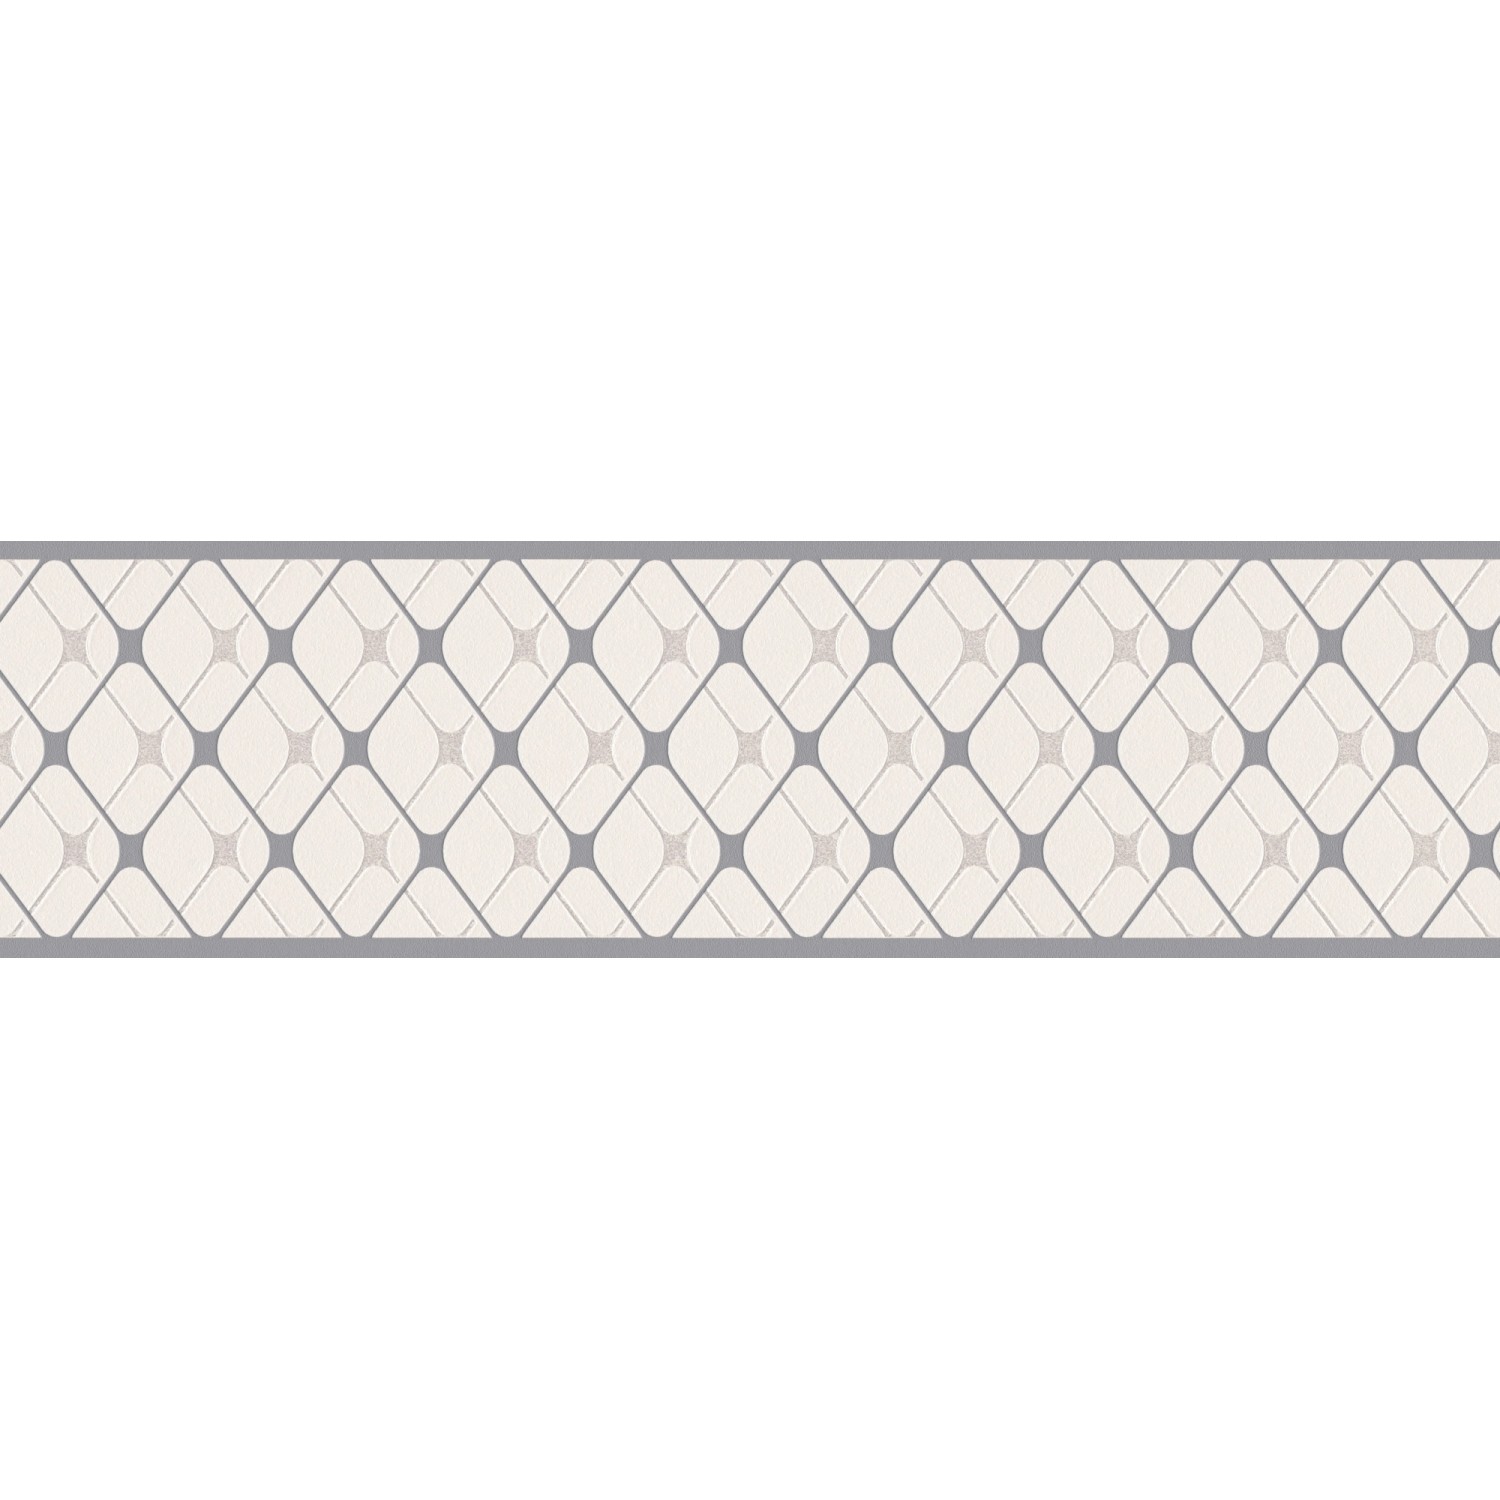 A.S. Création Borte selbstklebend Geometrisch 5 m x 17 cm Weiß-Grau günstig online kaufen